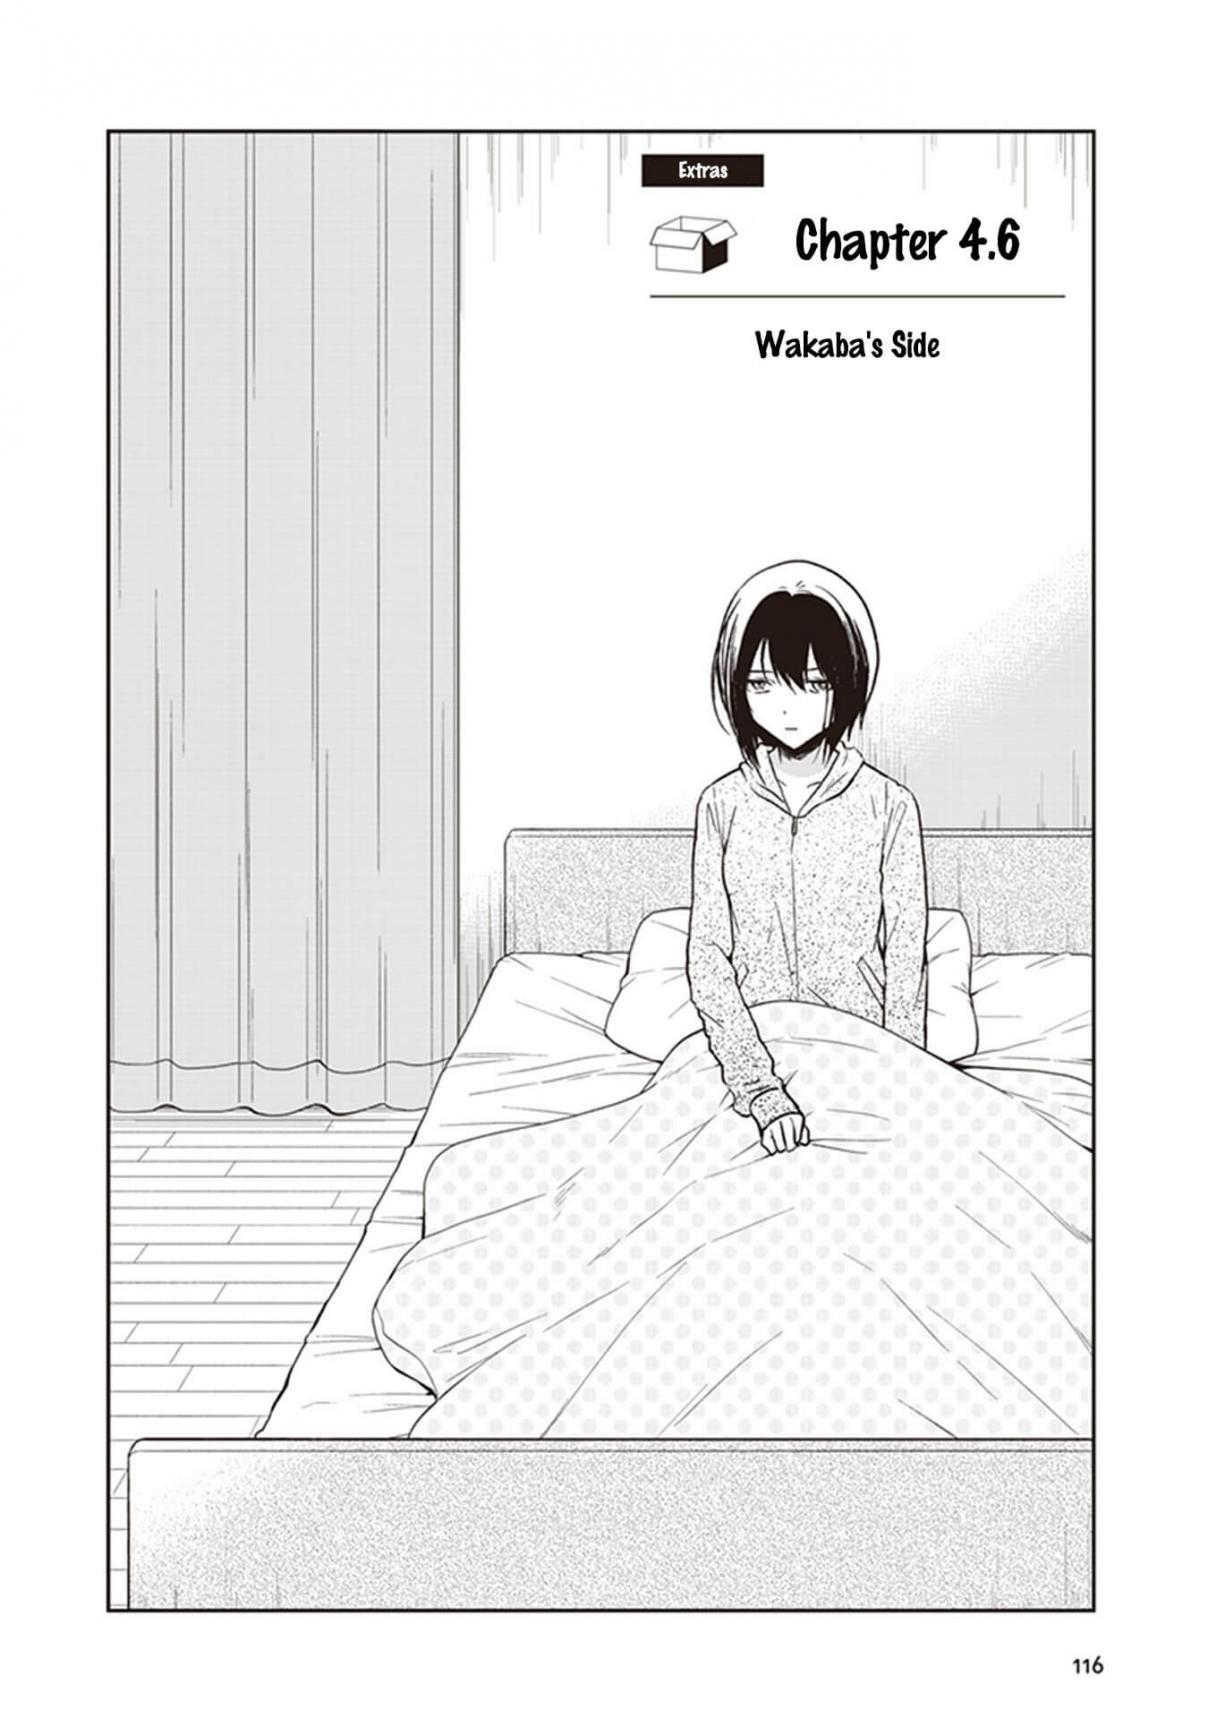 JK to Sutego no Akachan Vol. 1 Ch. 4.6 Chapter 4.6 (Wakaba's Side)